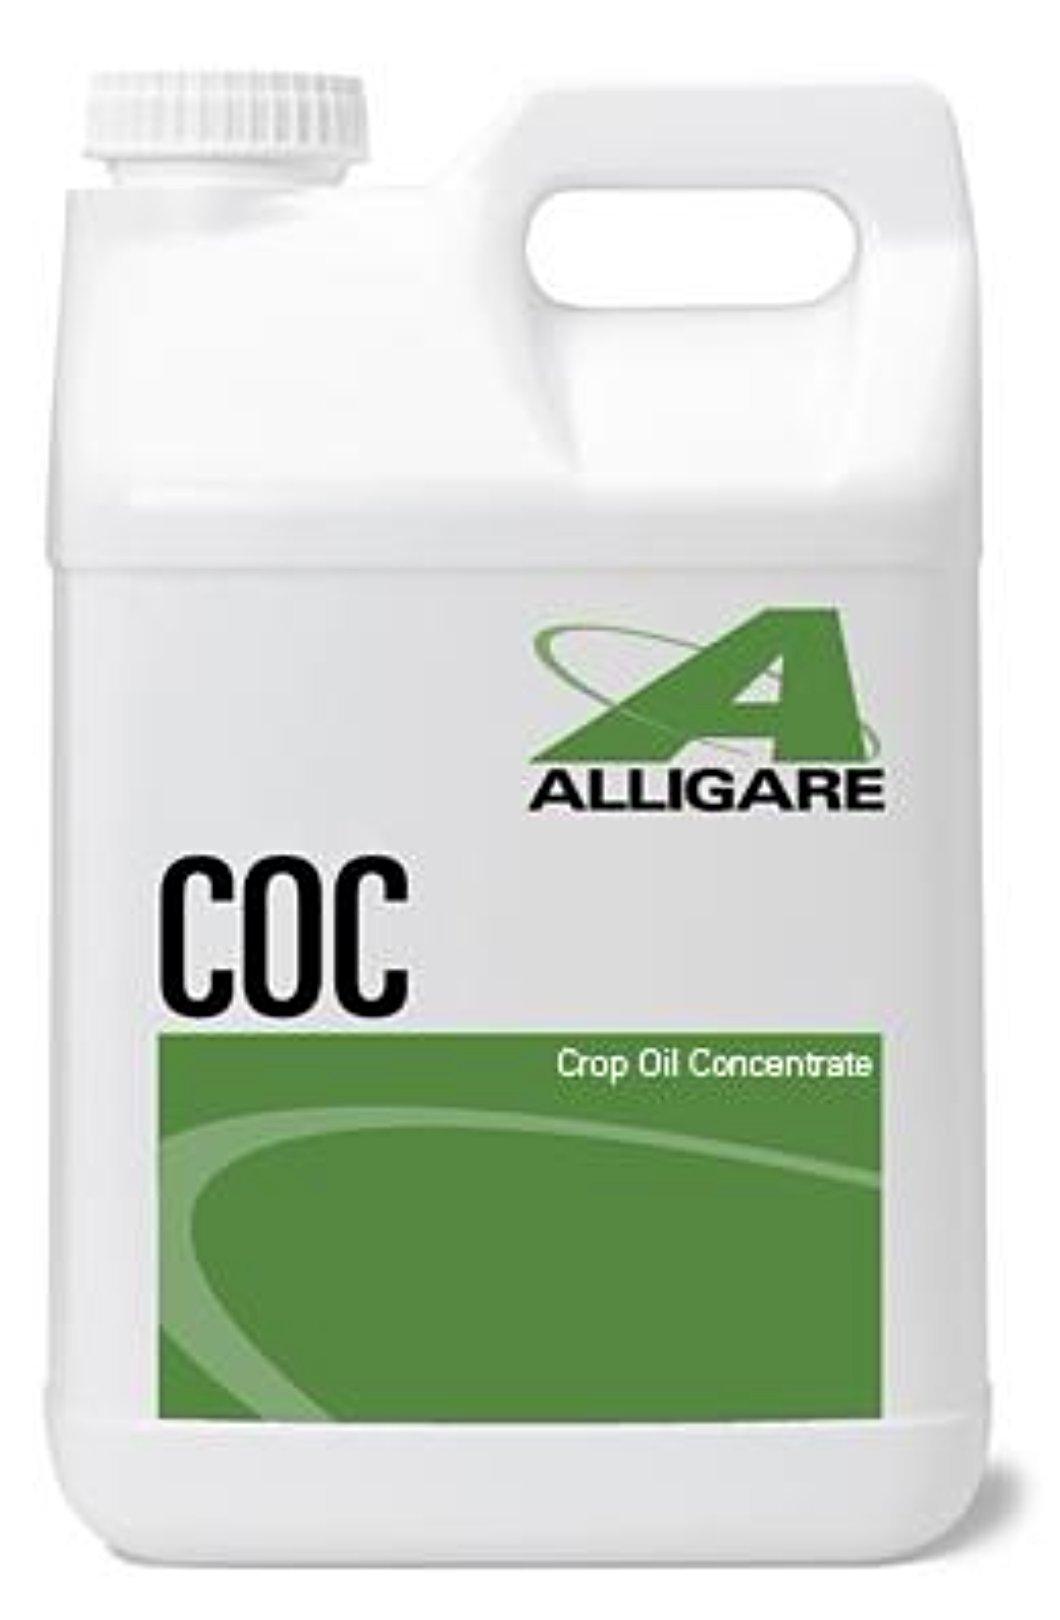 Surfactant - COC Oil Adjuvant And Surfactant For Herbicides